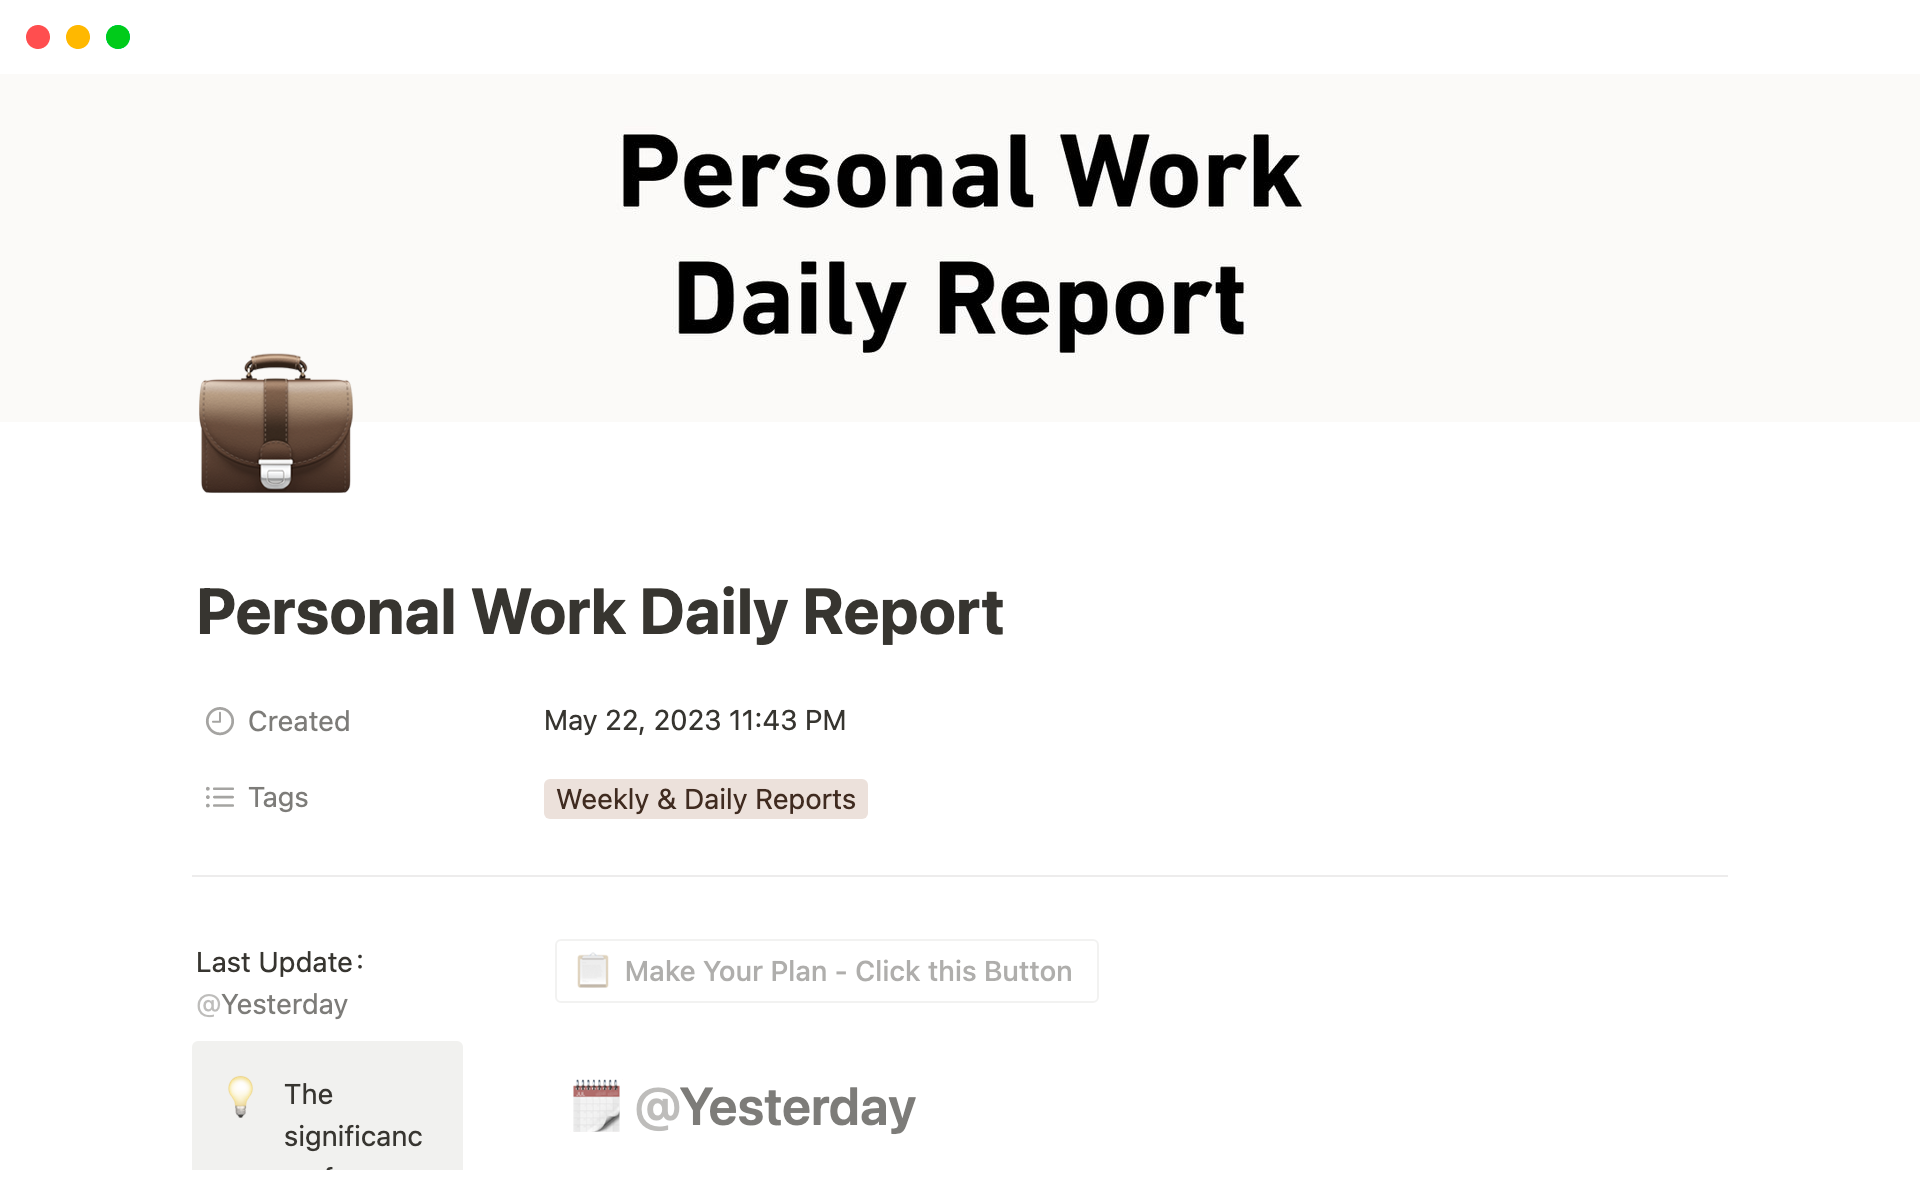 Vista previa de una plantilla para Personal Work Daily Report